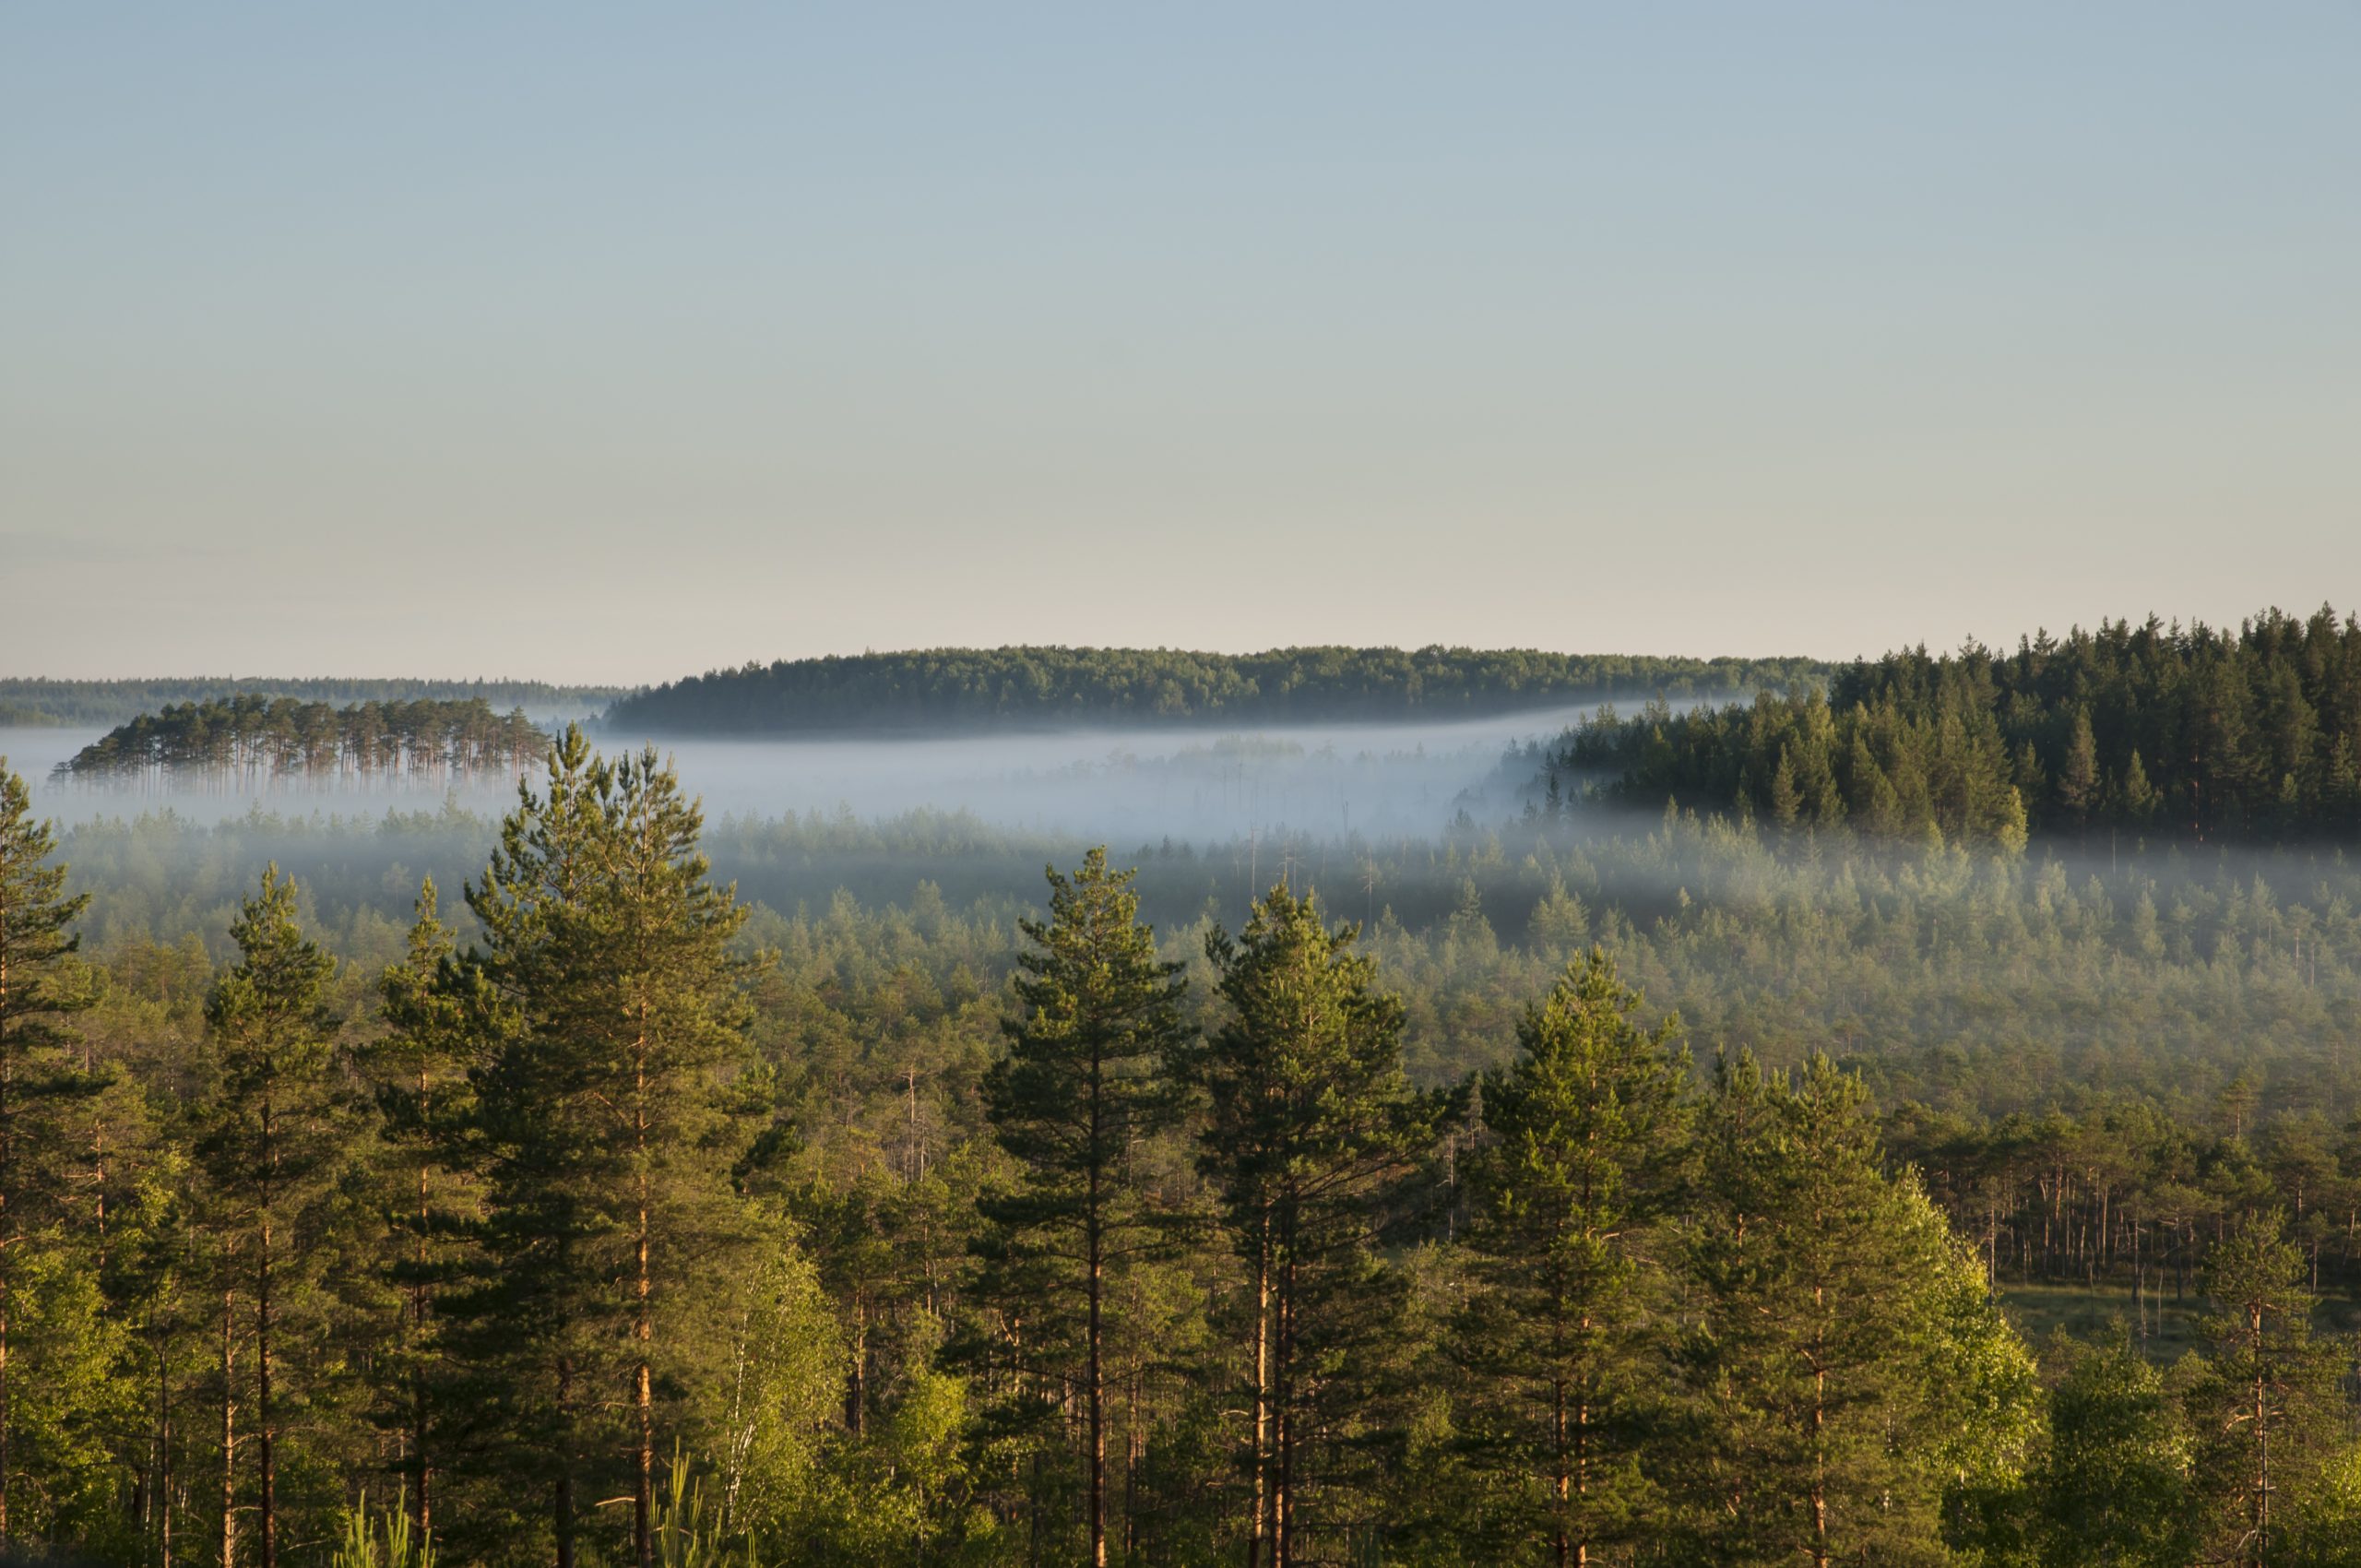 Sunrise and fog over forest landscape in Estonia